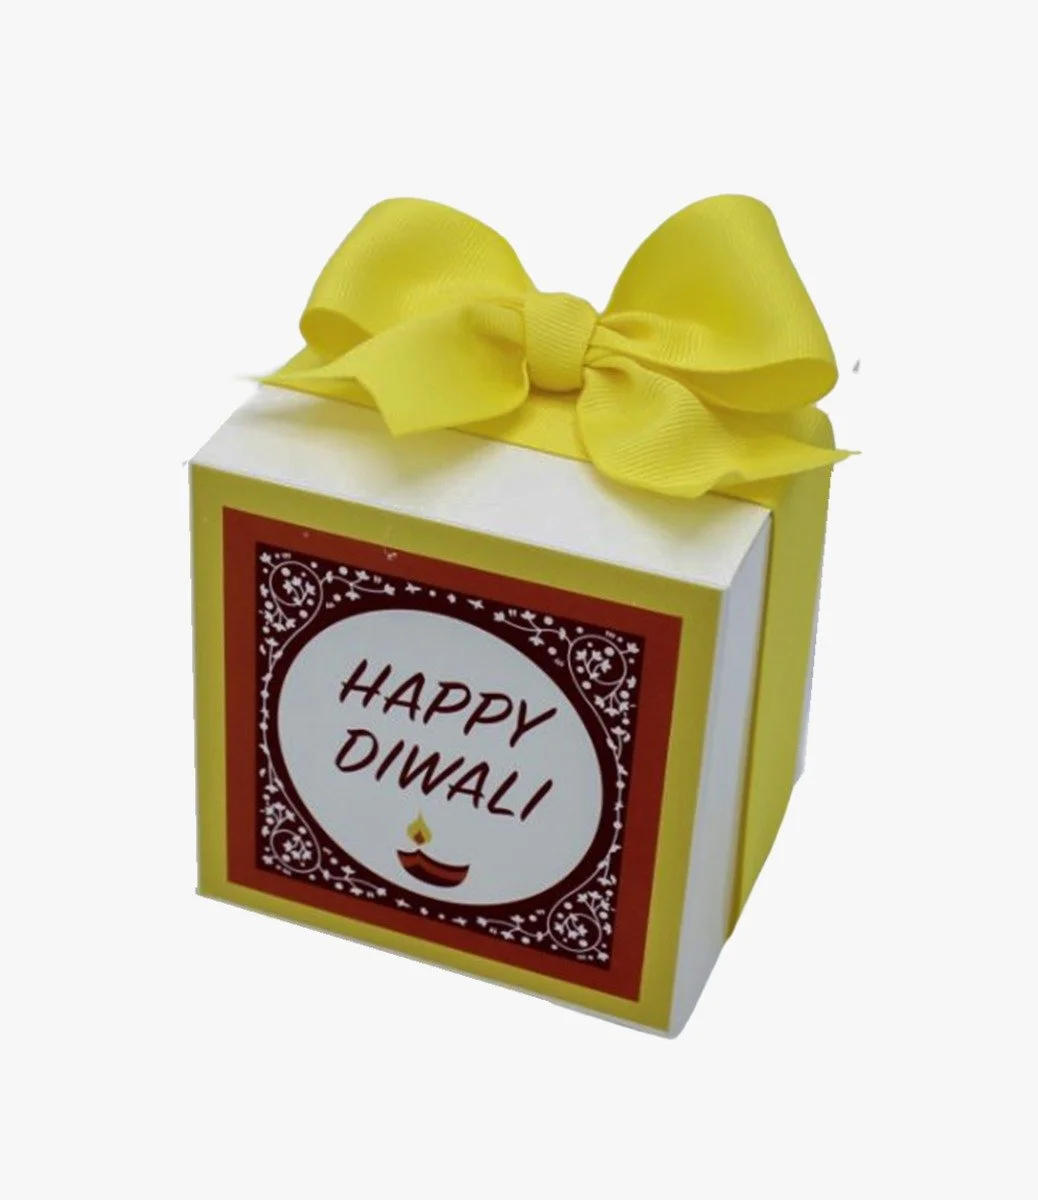 Diwali Designed Chocolate Box by Le Chocolatier